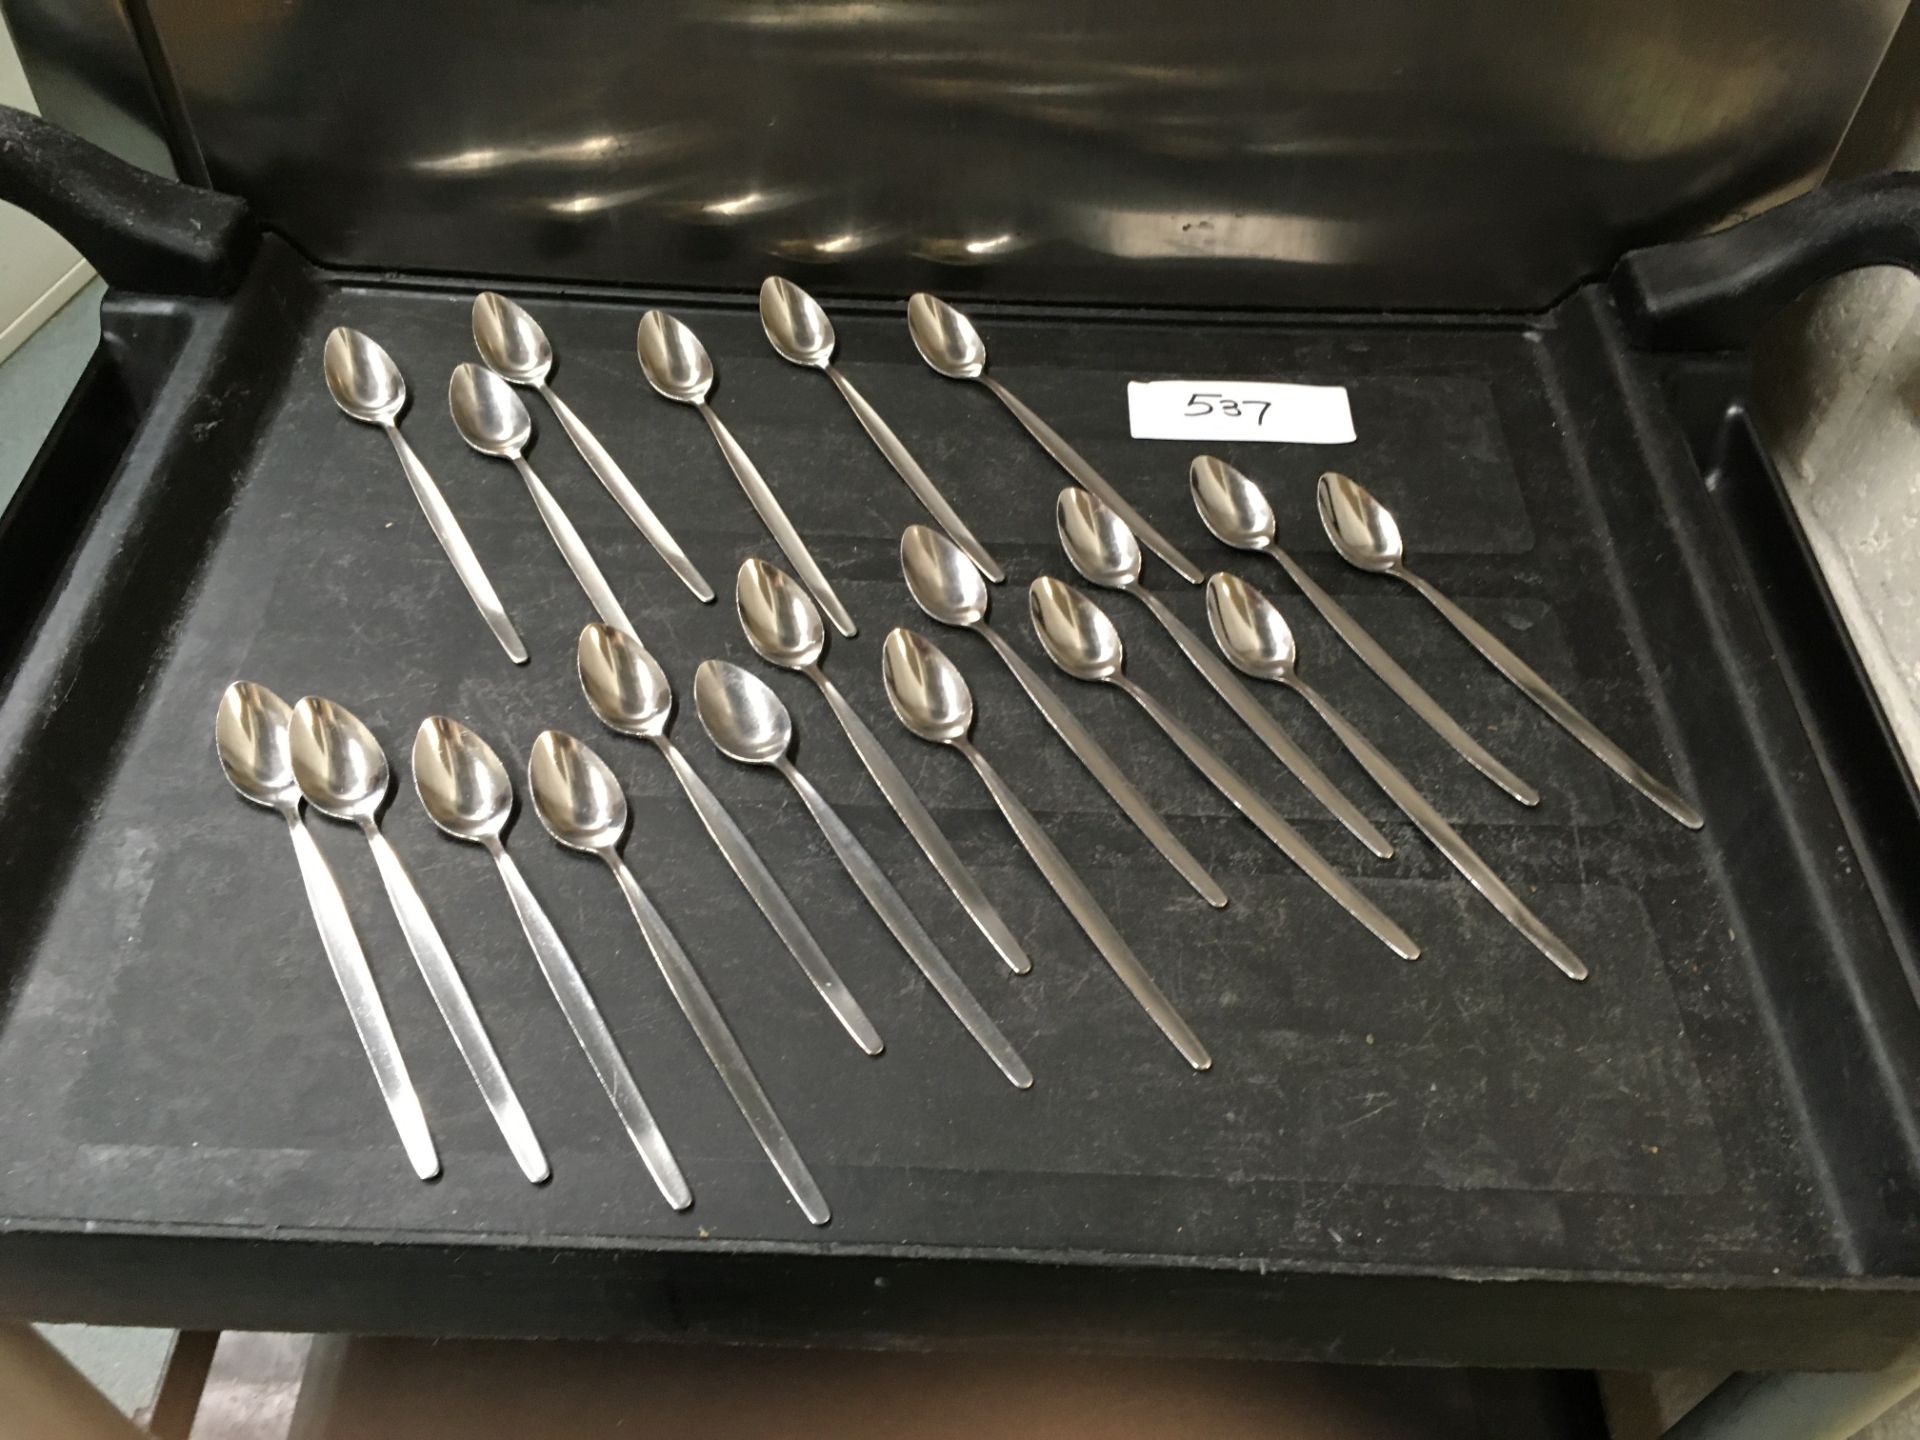 20 x long handled spoons